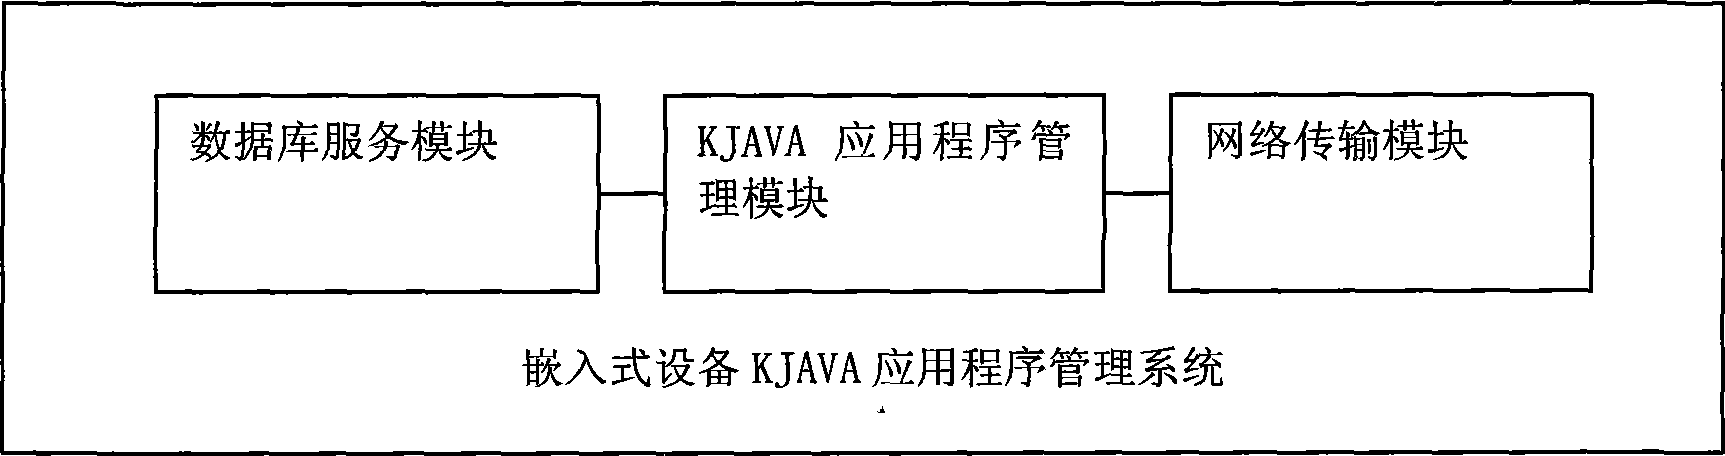 Embedded type equipment KJAVA application program management system and method